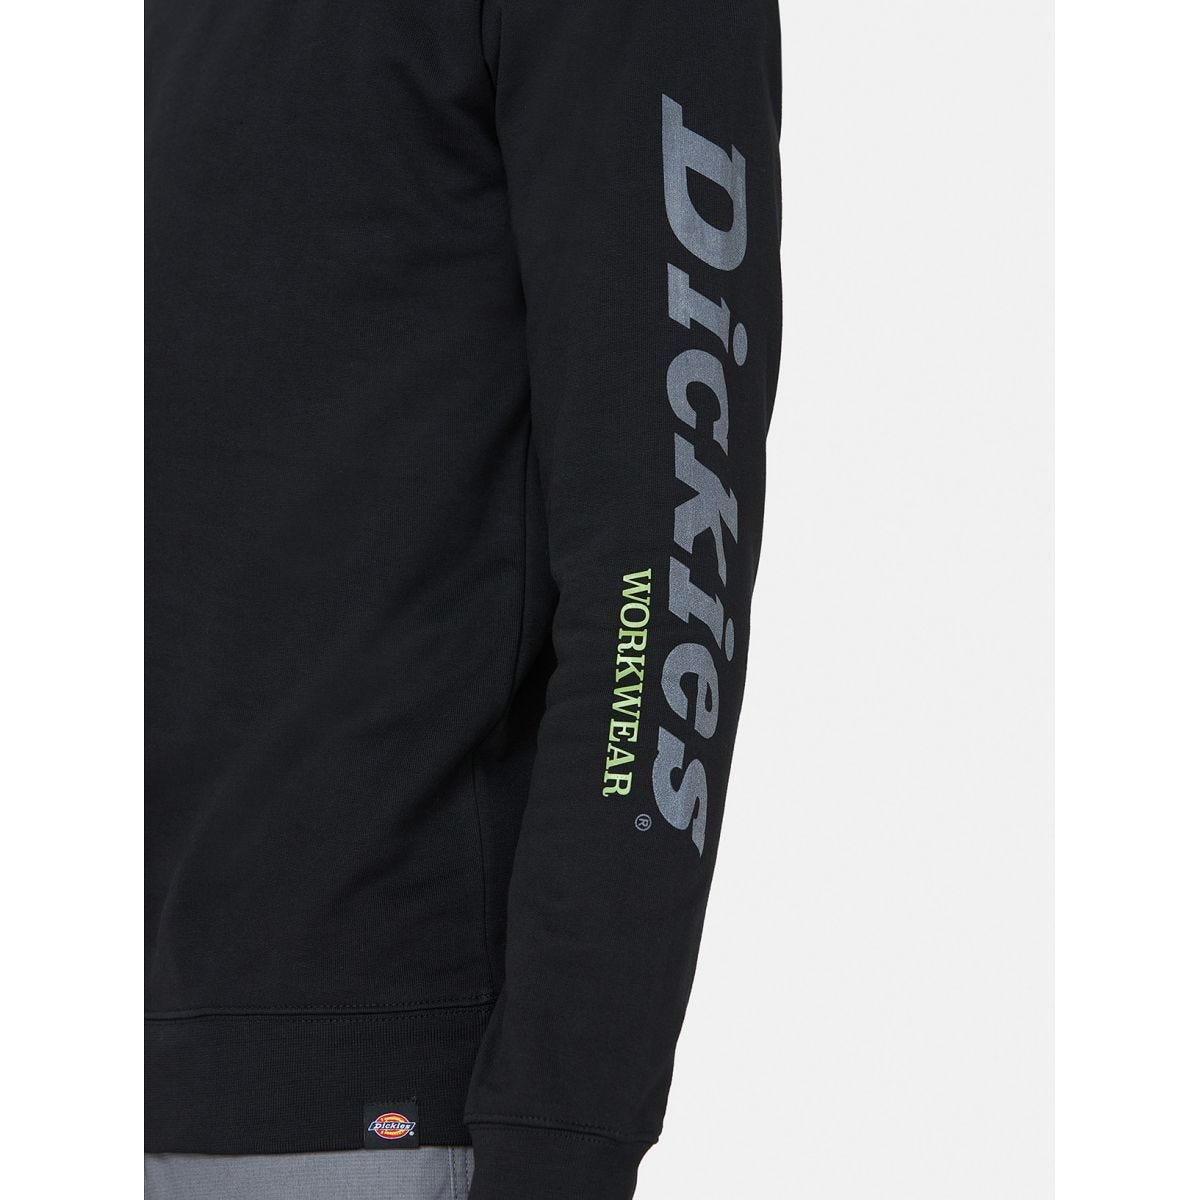 Sweat-shirt imprimé Okemo Noir - Dickies - Taille 3XL 4